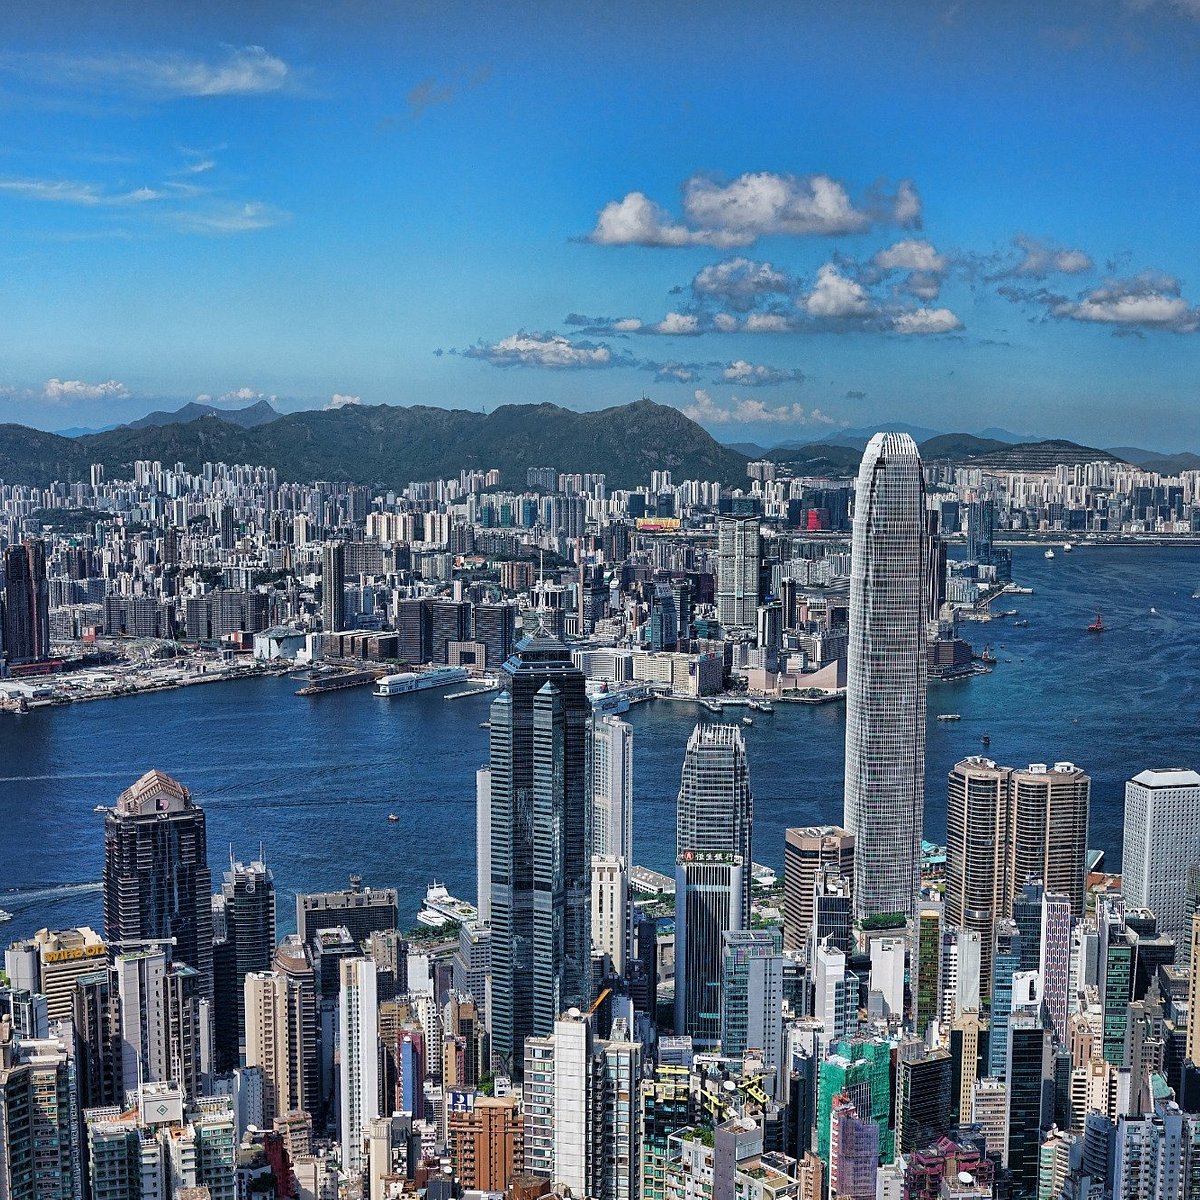 Hong Kong Insider Tours (China): Hours, Address - Tripadvisor